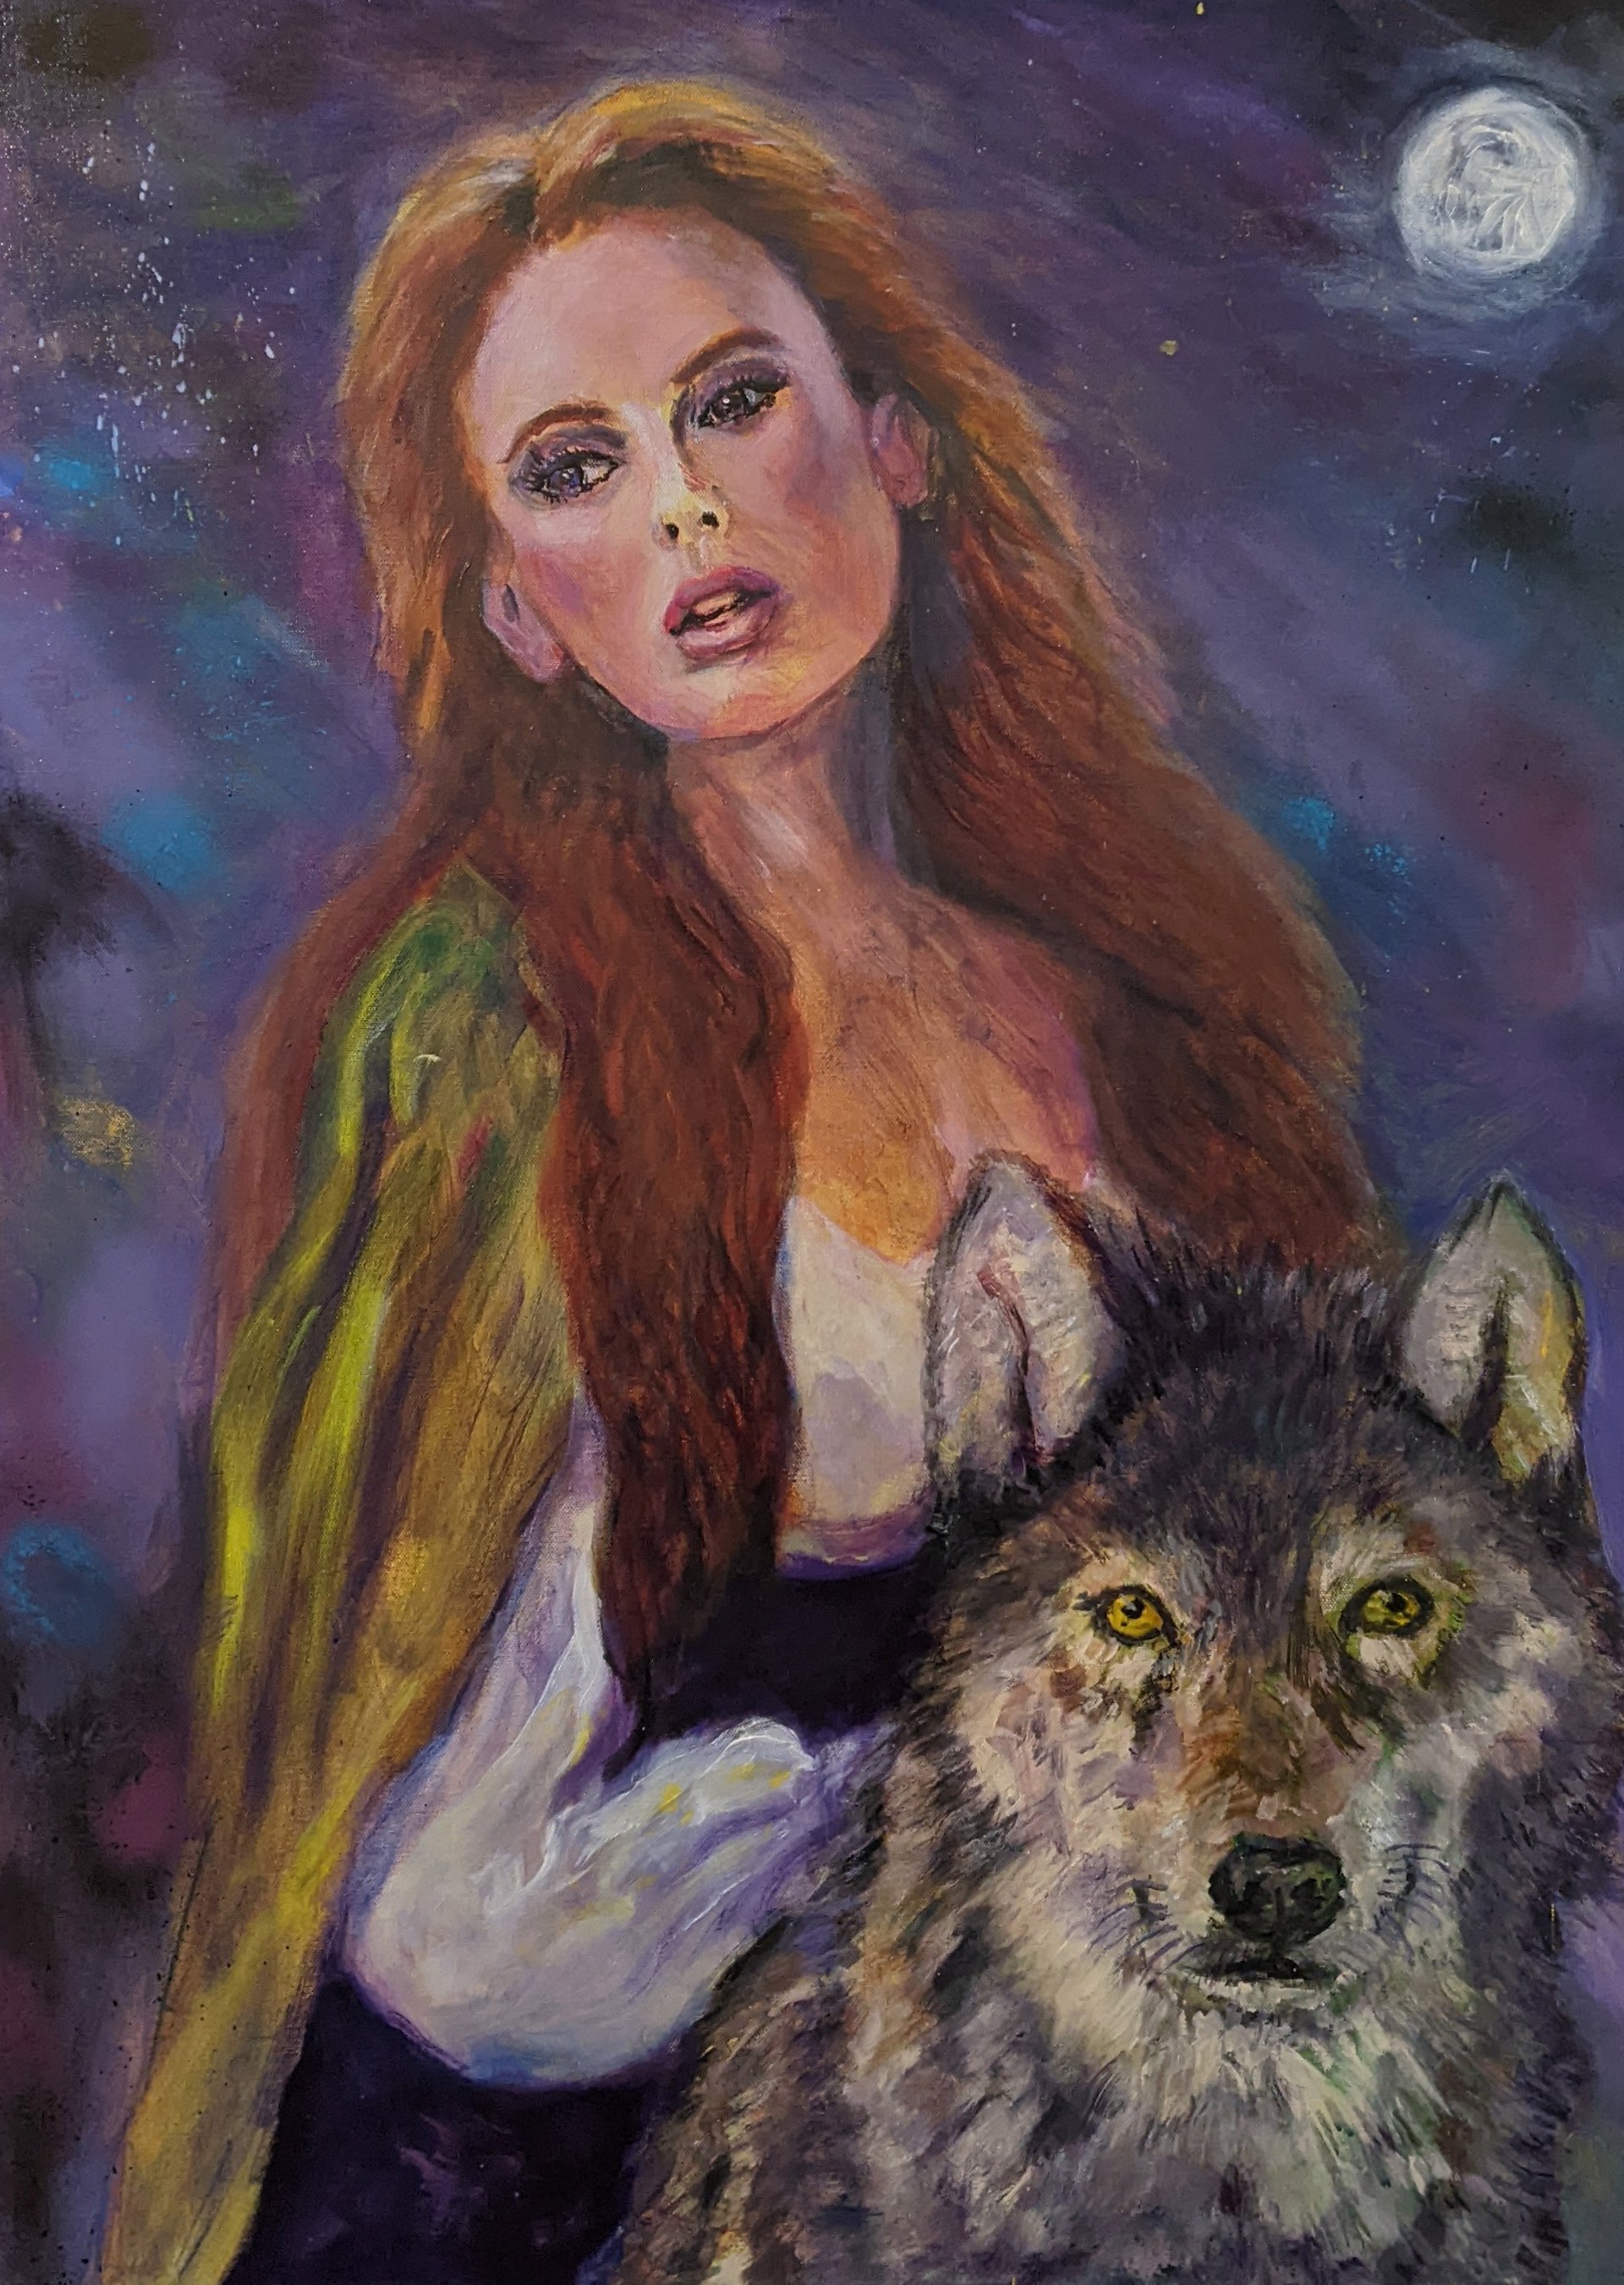 The Wolf's Maiden by Bryan Jeppson